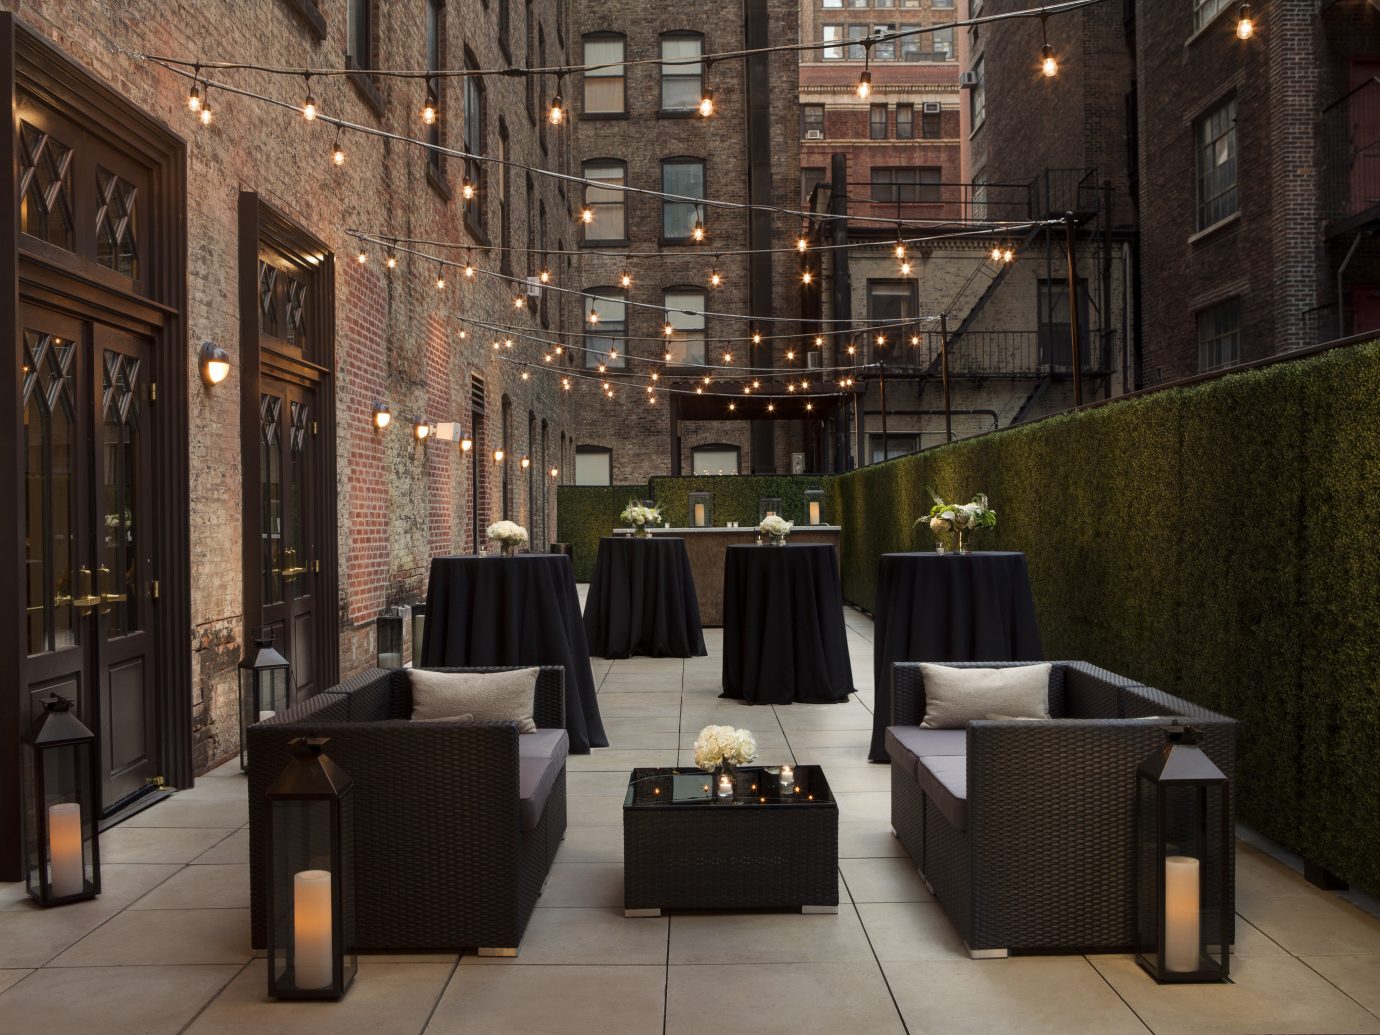 Hotels chair Lobby interior design restaurant Design estate Bar area